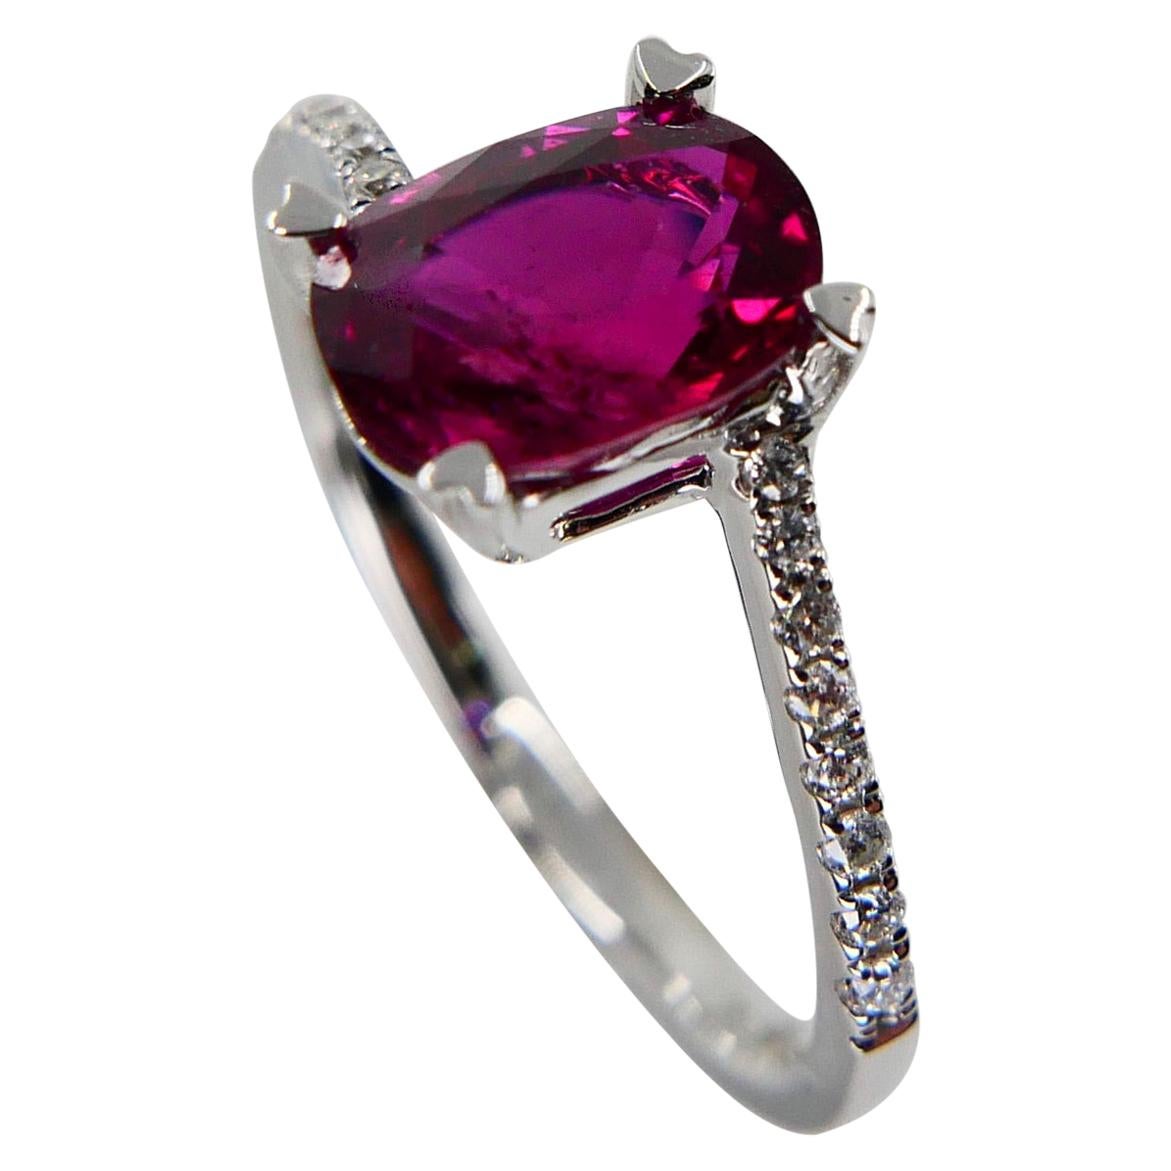 Burma Ruby 1.39 Carat and Diamond Ring, 18 Karat Gold, Heart Shaped Prongs